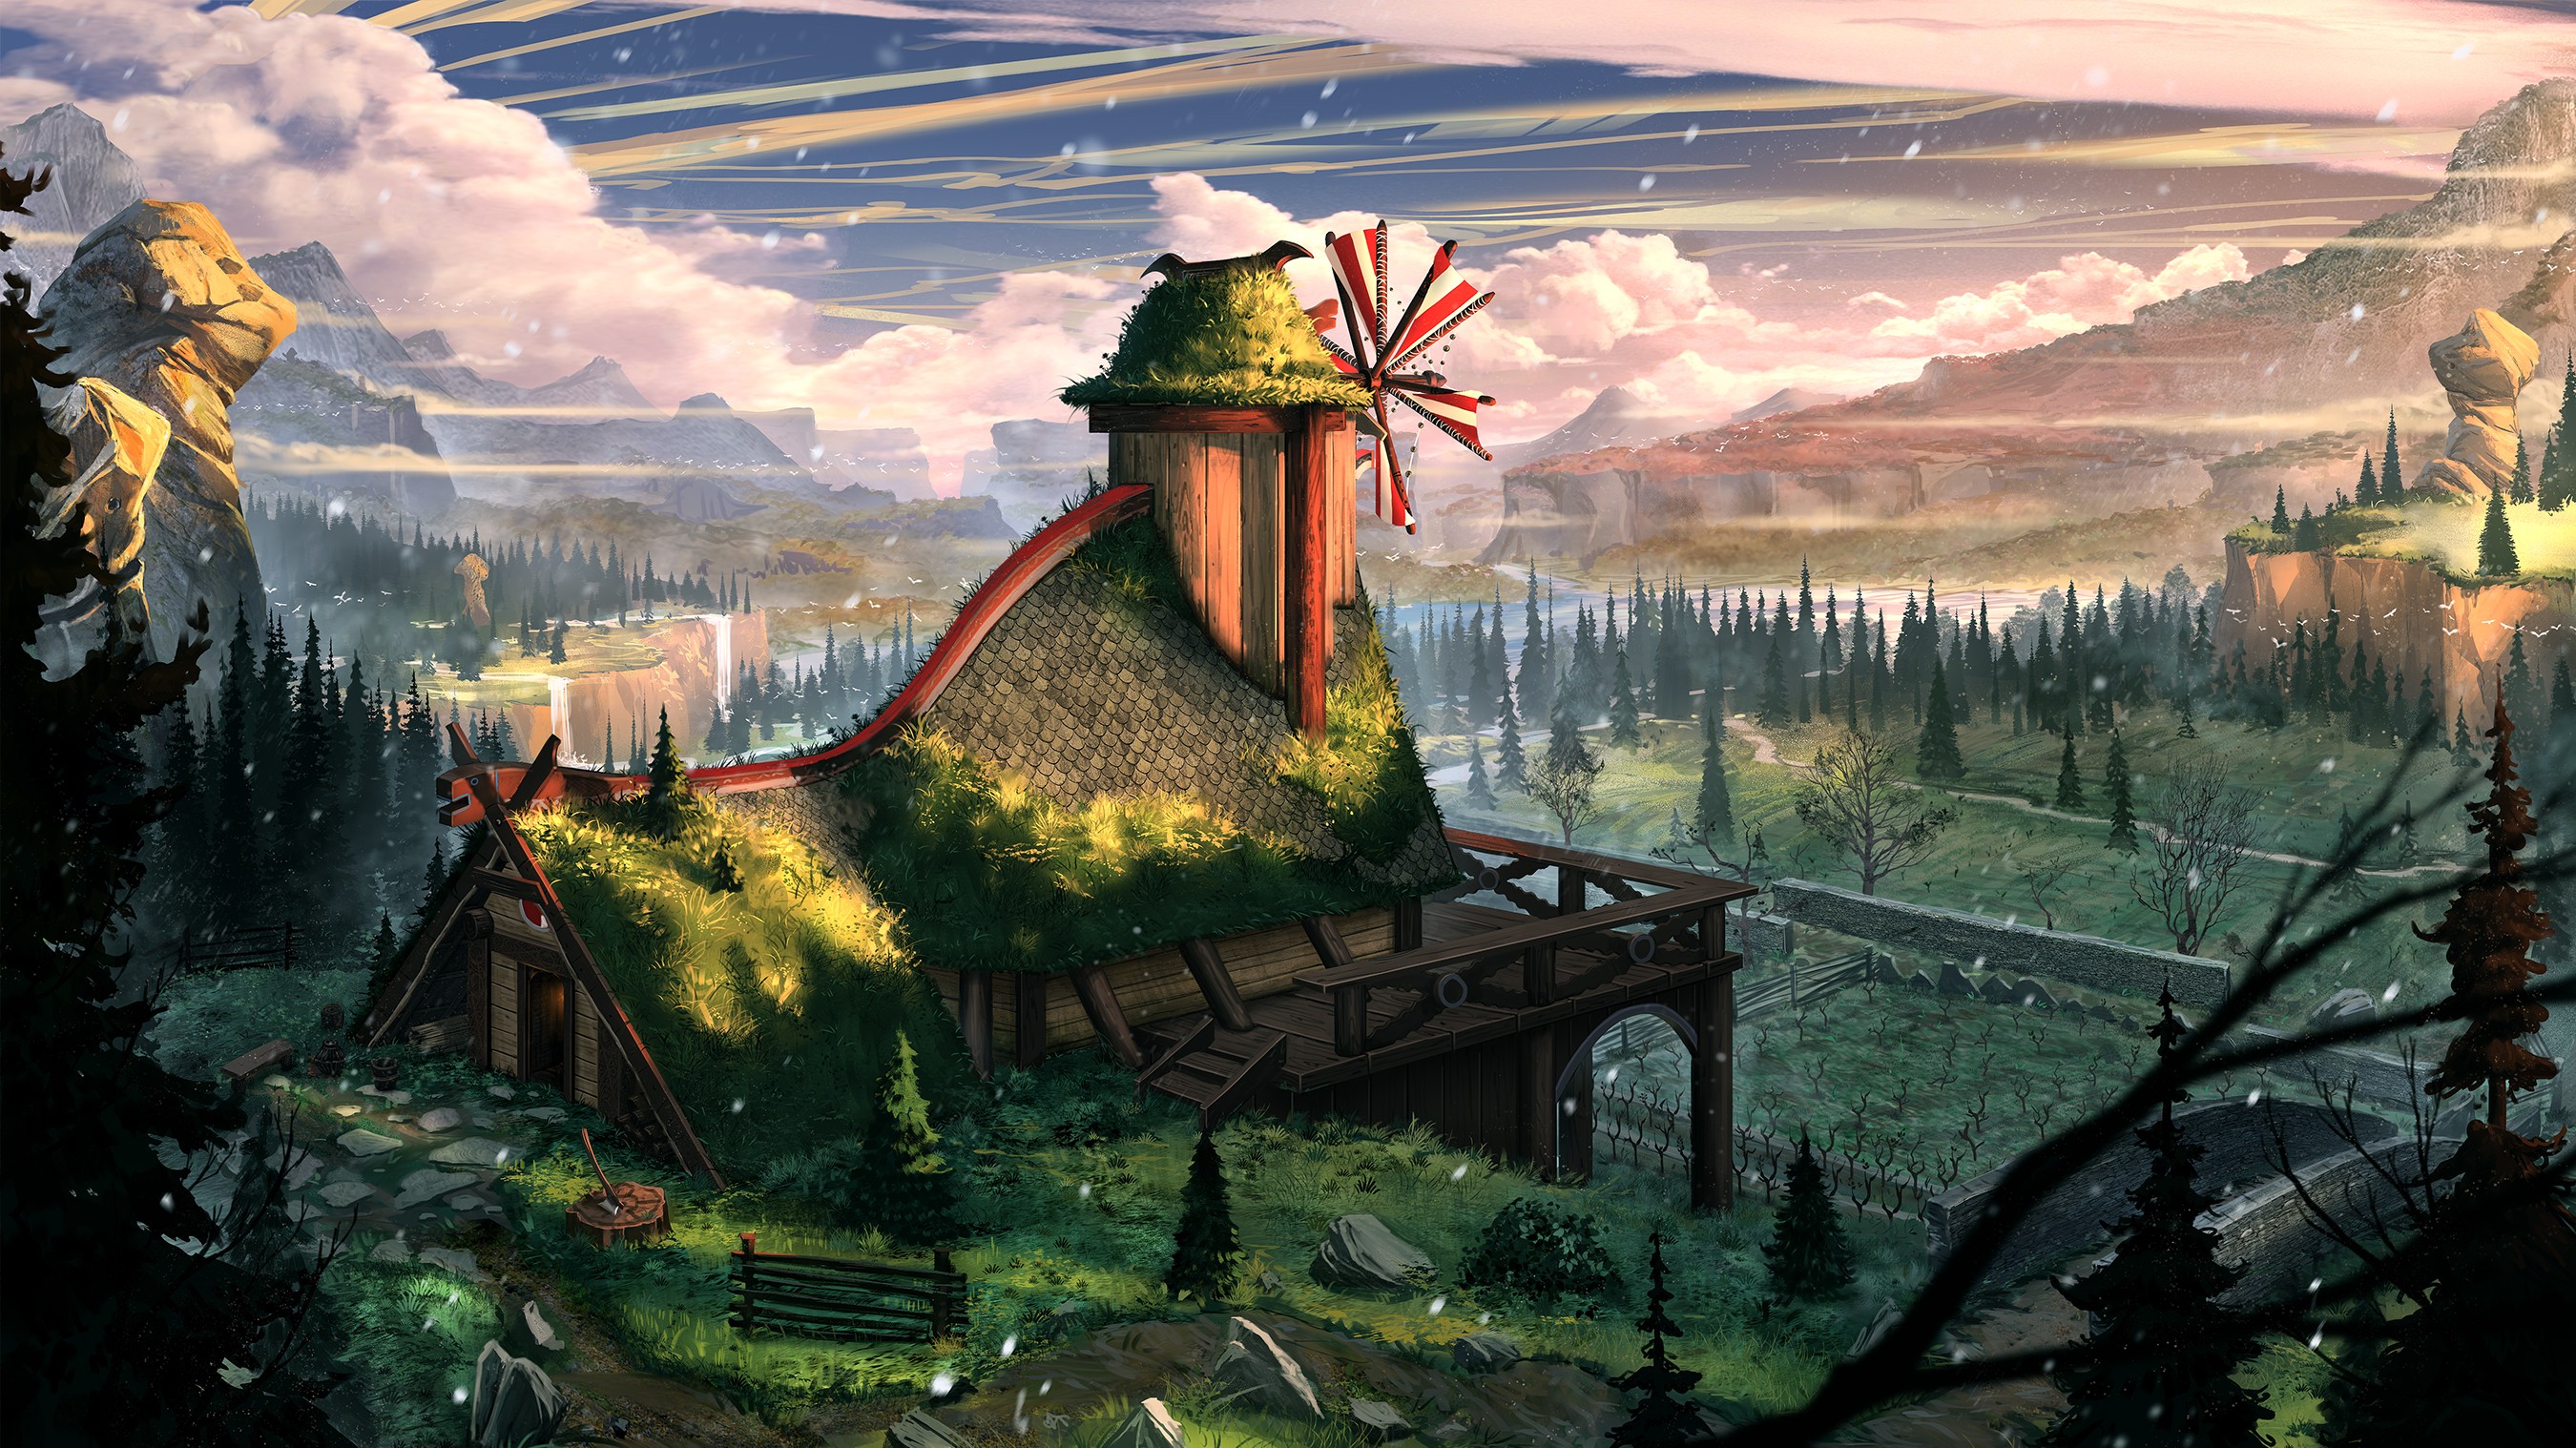 Viking_Windmill_Concept_Art_Exterior2_small par adrienG